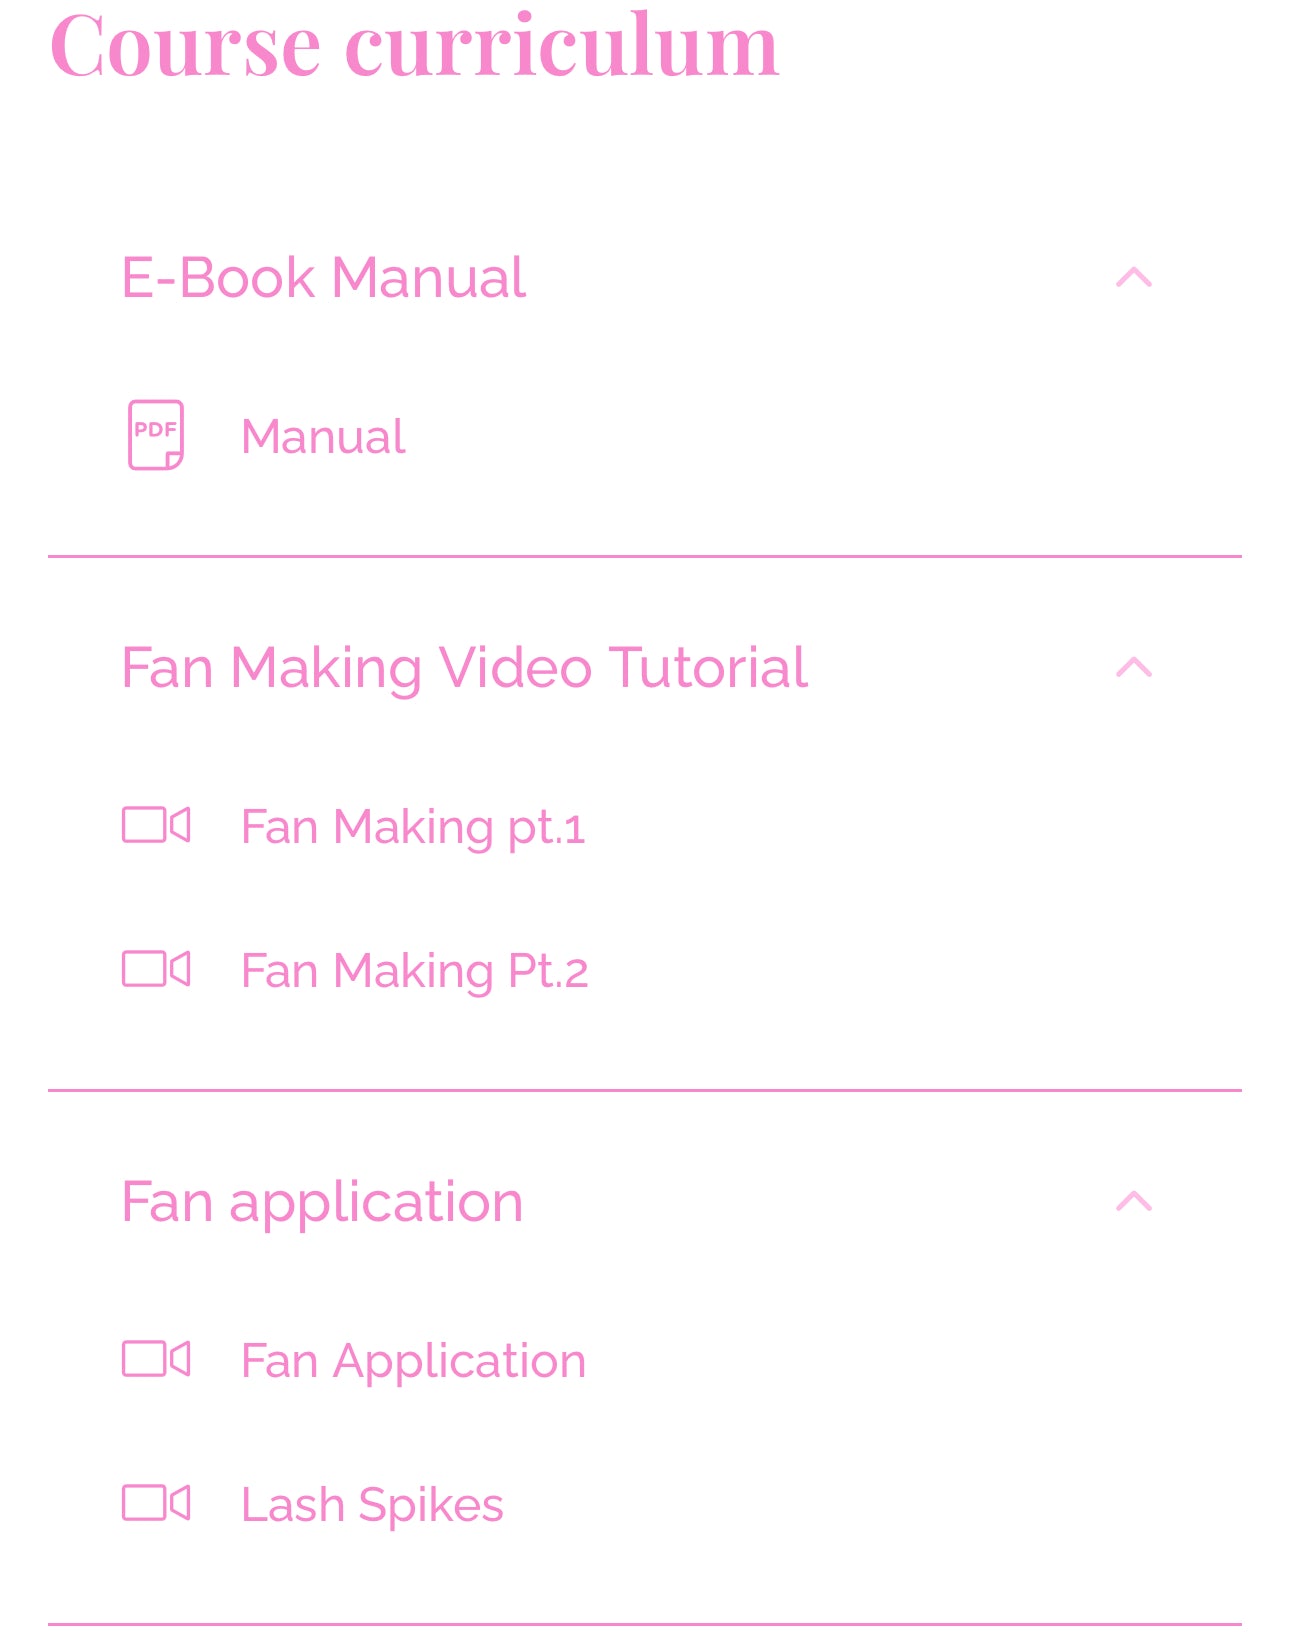 Fan Making E-Book | Skill Training